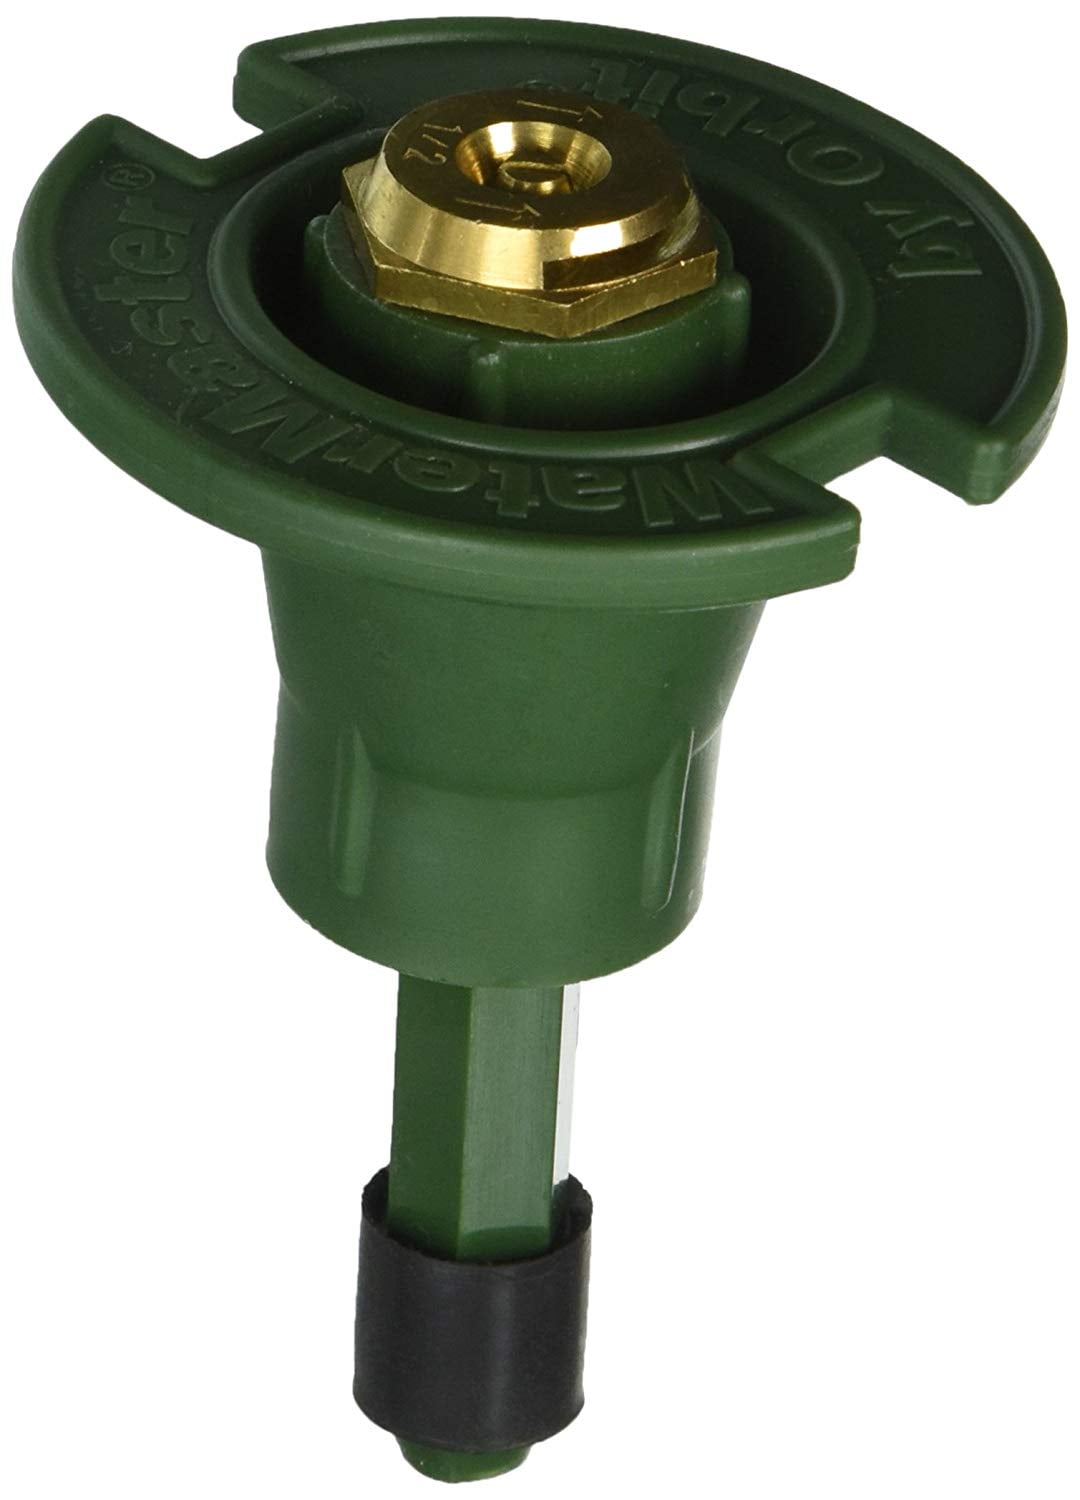 Orbit Brass 180 Degree Half Spray Pattern Shrub & Plant Water Sprinkler 54031 